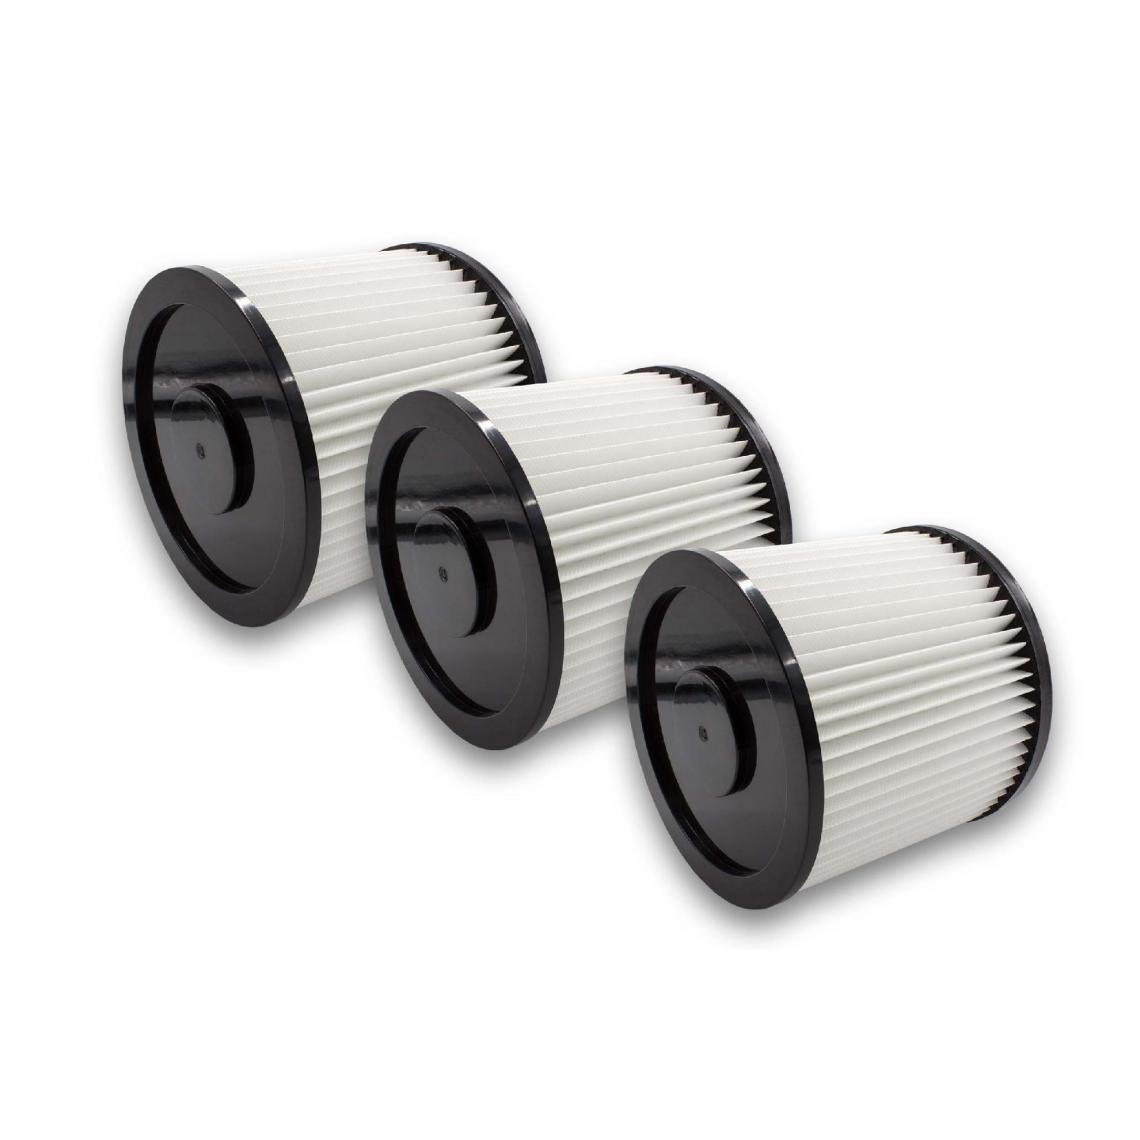 Vhbw - vhbw Set de filtres 3x Filtre plissé compatible avec AquaVac FAM aspirateur à sec ou humide - Filtre à cartouche - Accessoire entretien des sols